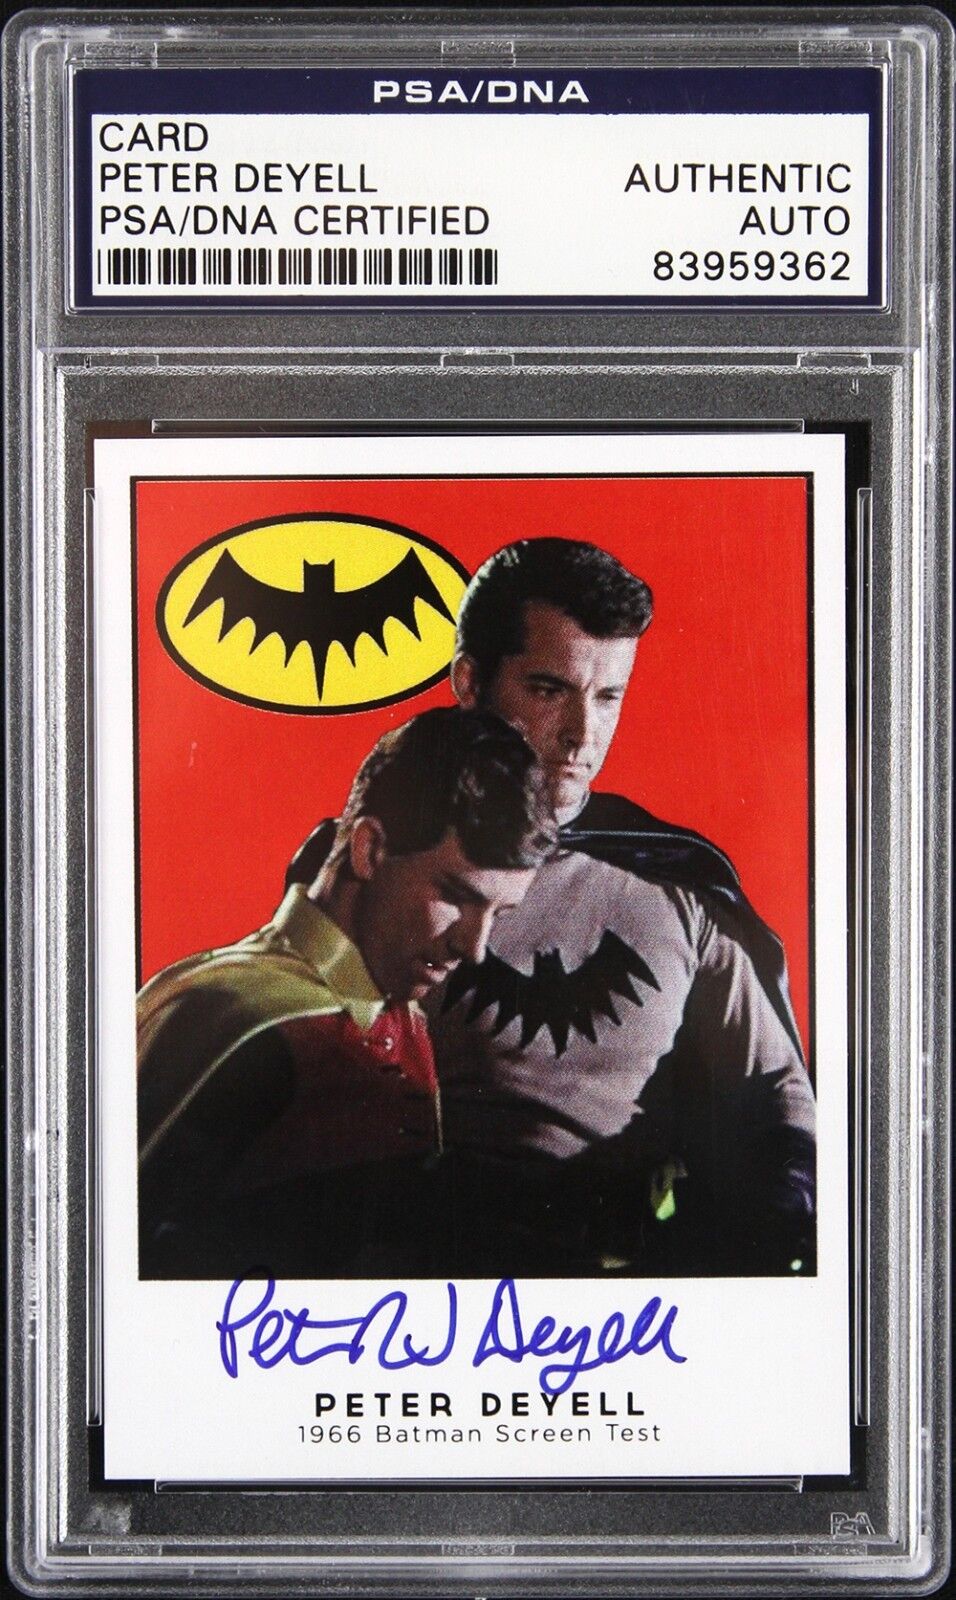 1965 Peter Deyell Batman Screen Test Signed Slabbed Card (PSA/DNA) “Both Actors”